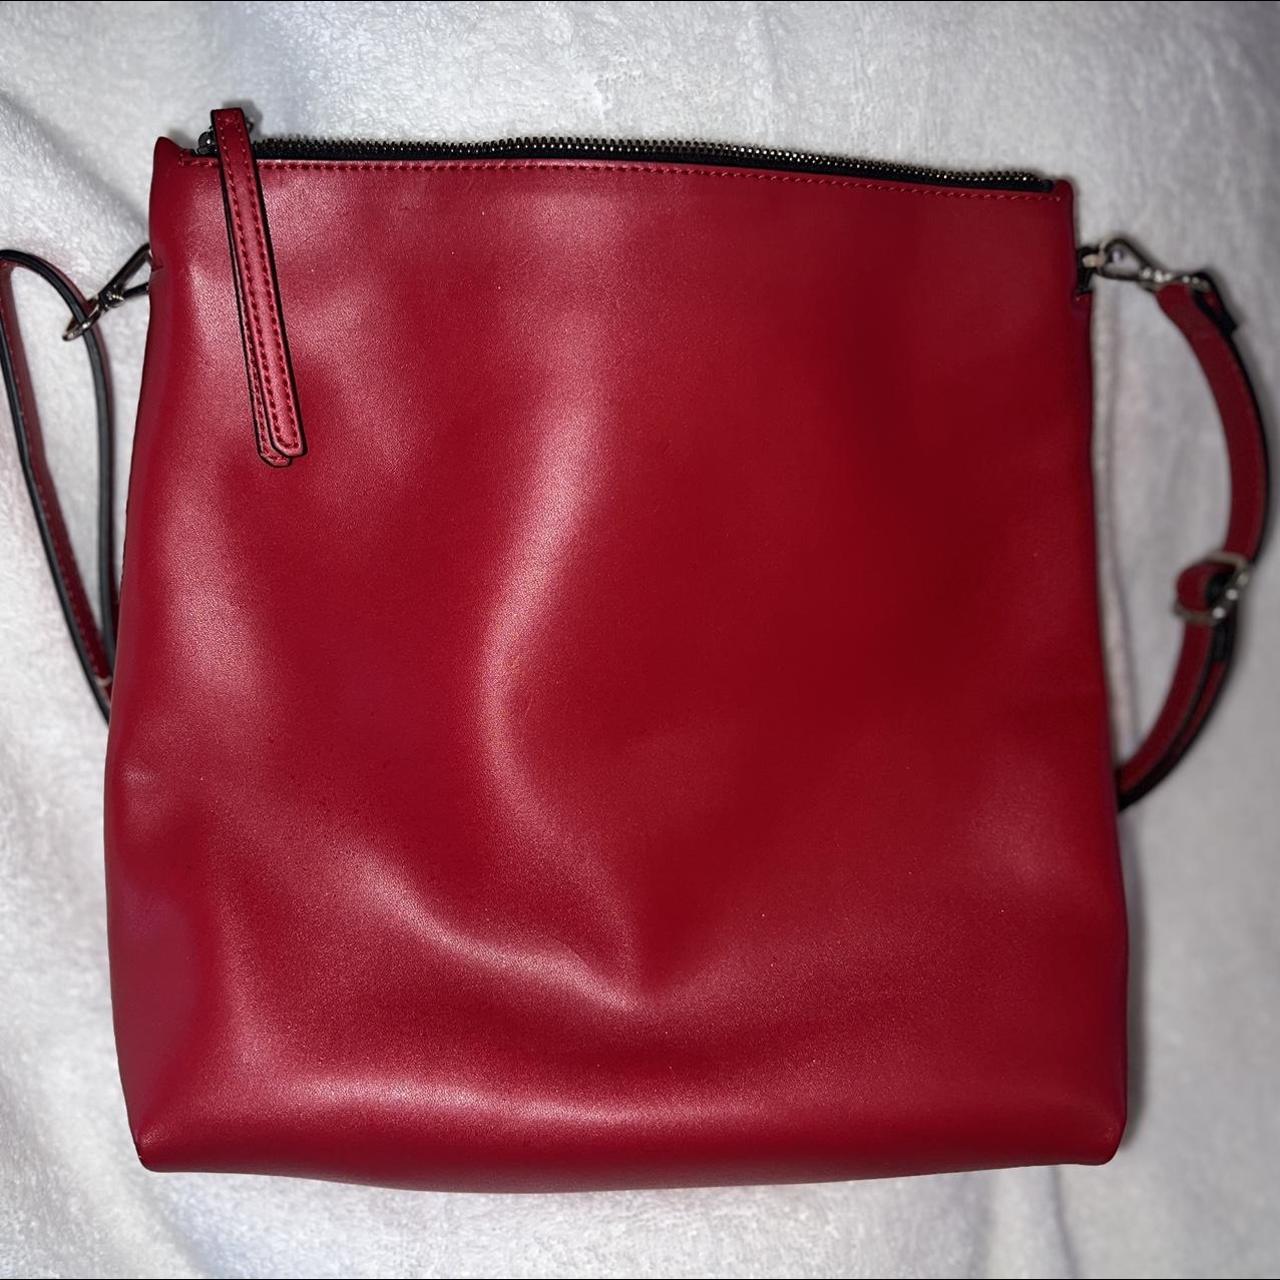 Fiorelli Women's Red Bag | Depop